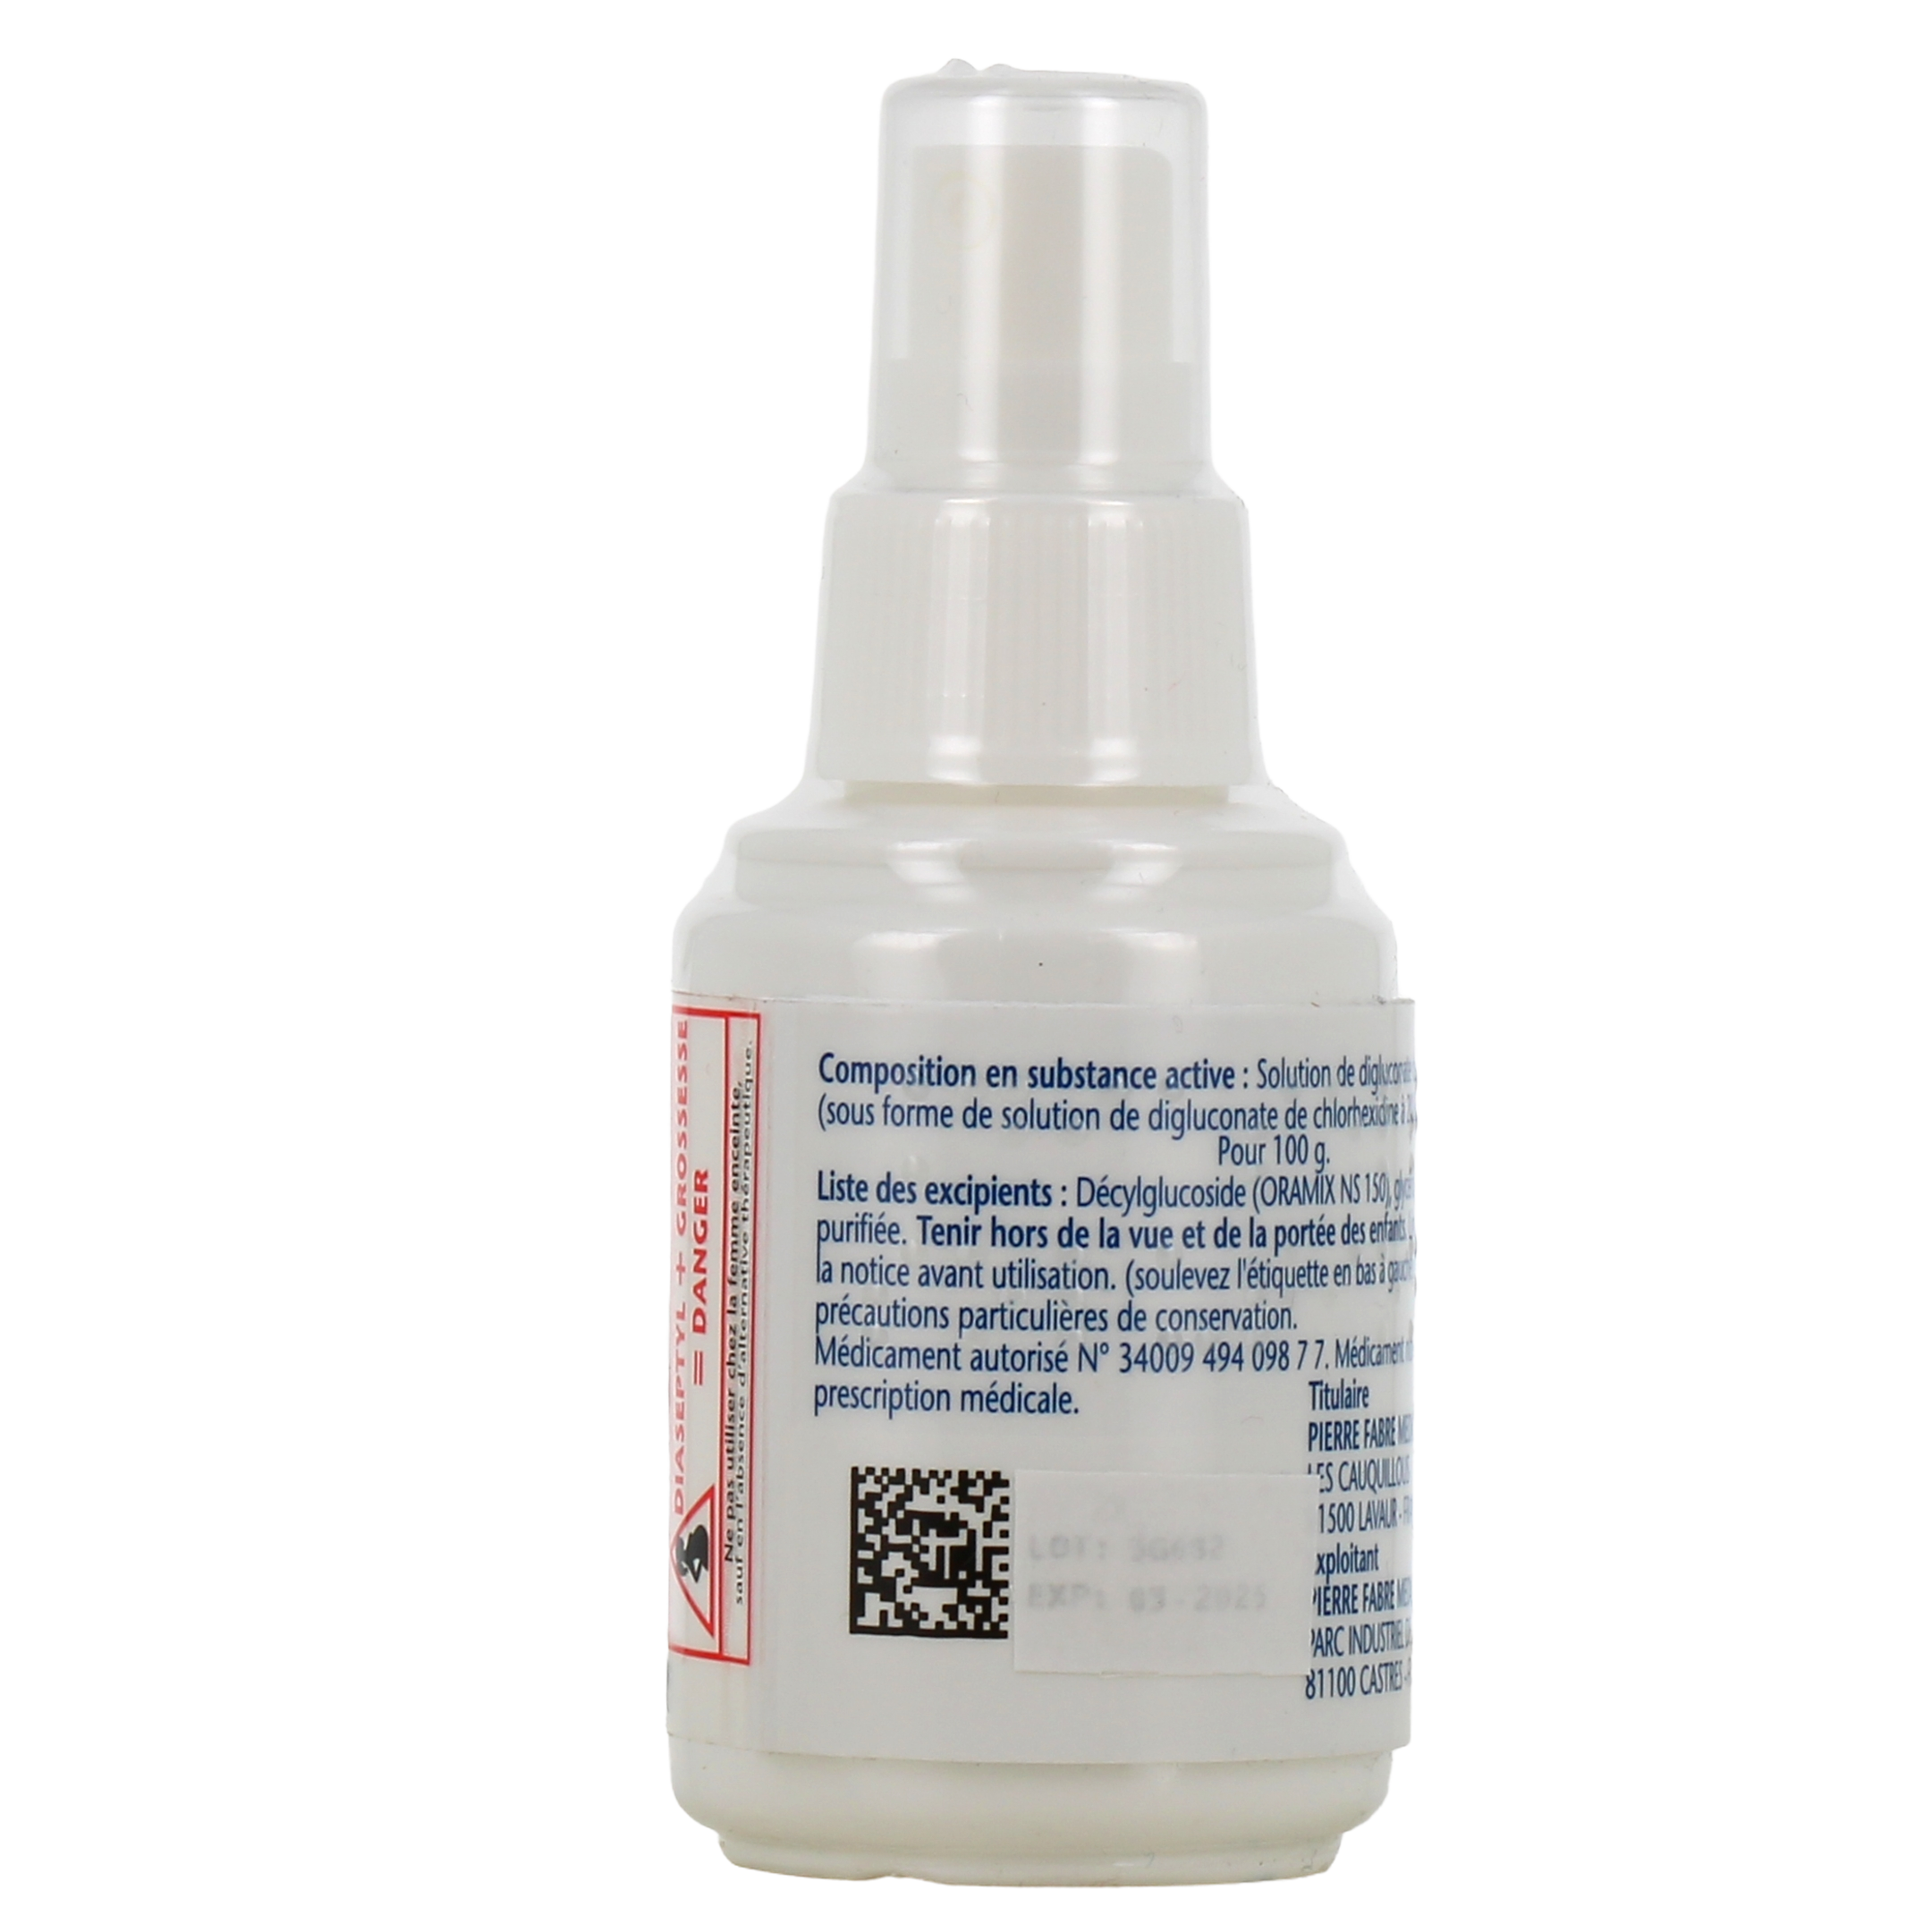 Cooper solution antiseptique chlorhexidine 0,5% spray 100mL